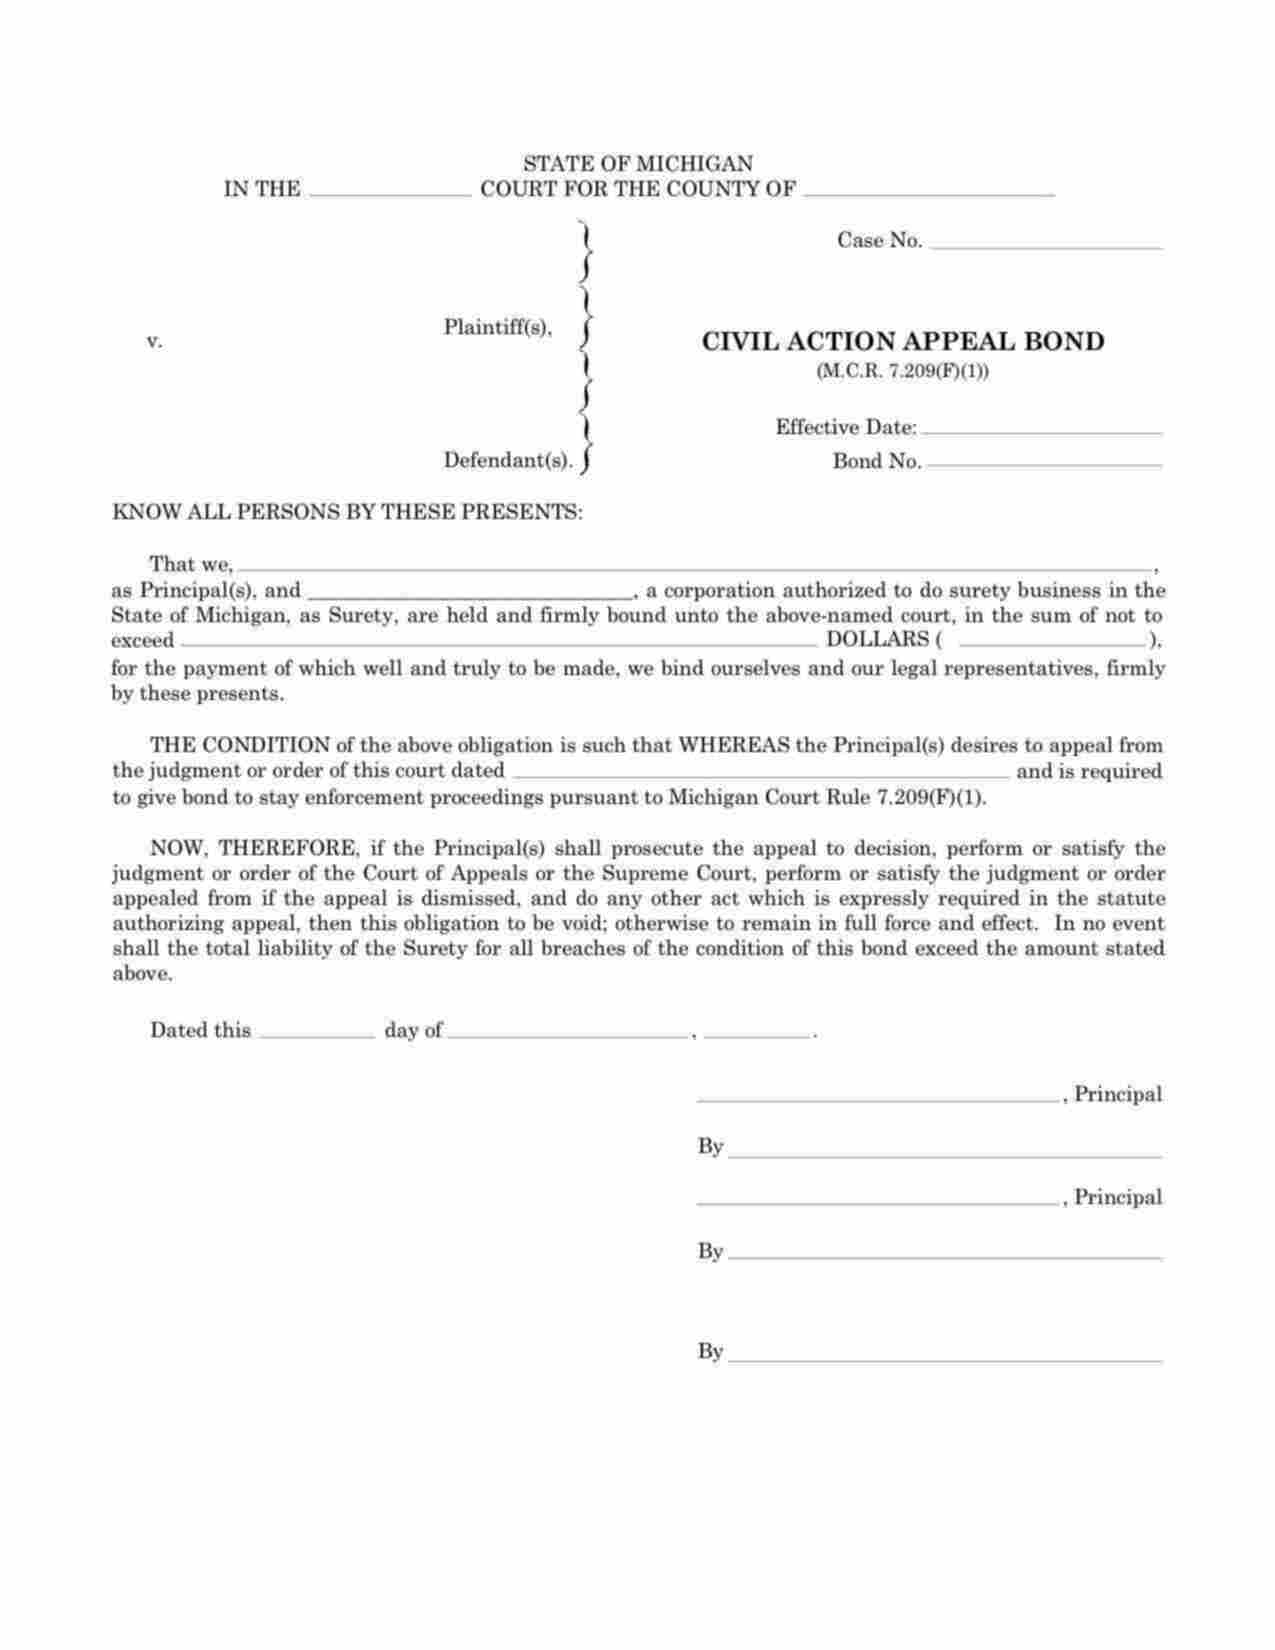 Michigan Civil Action Appeal Bond Form